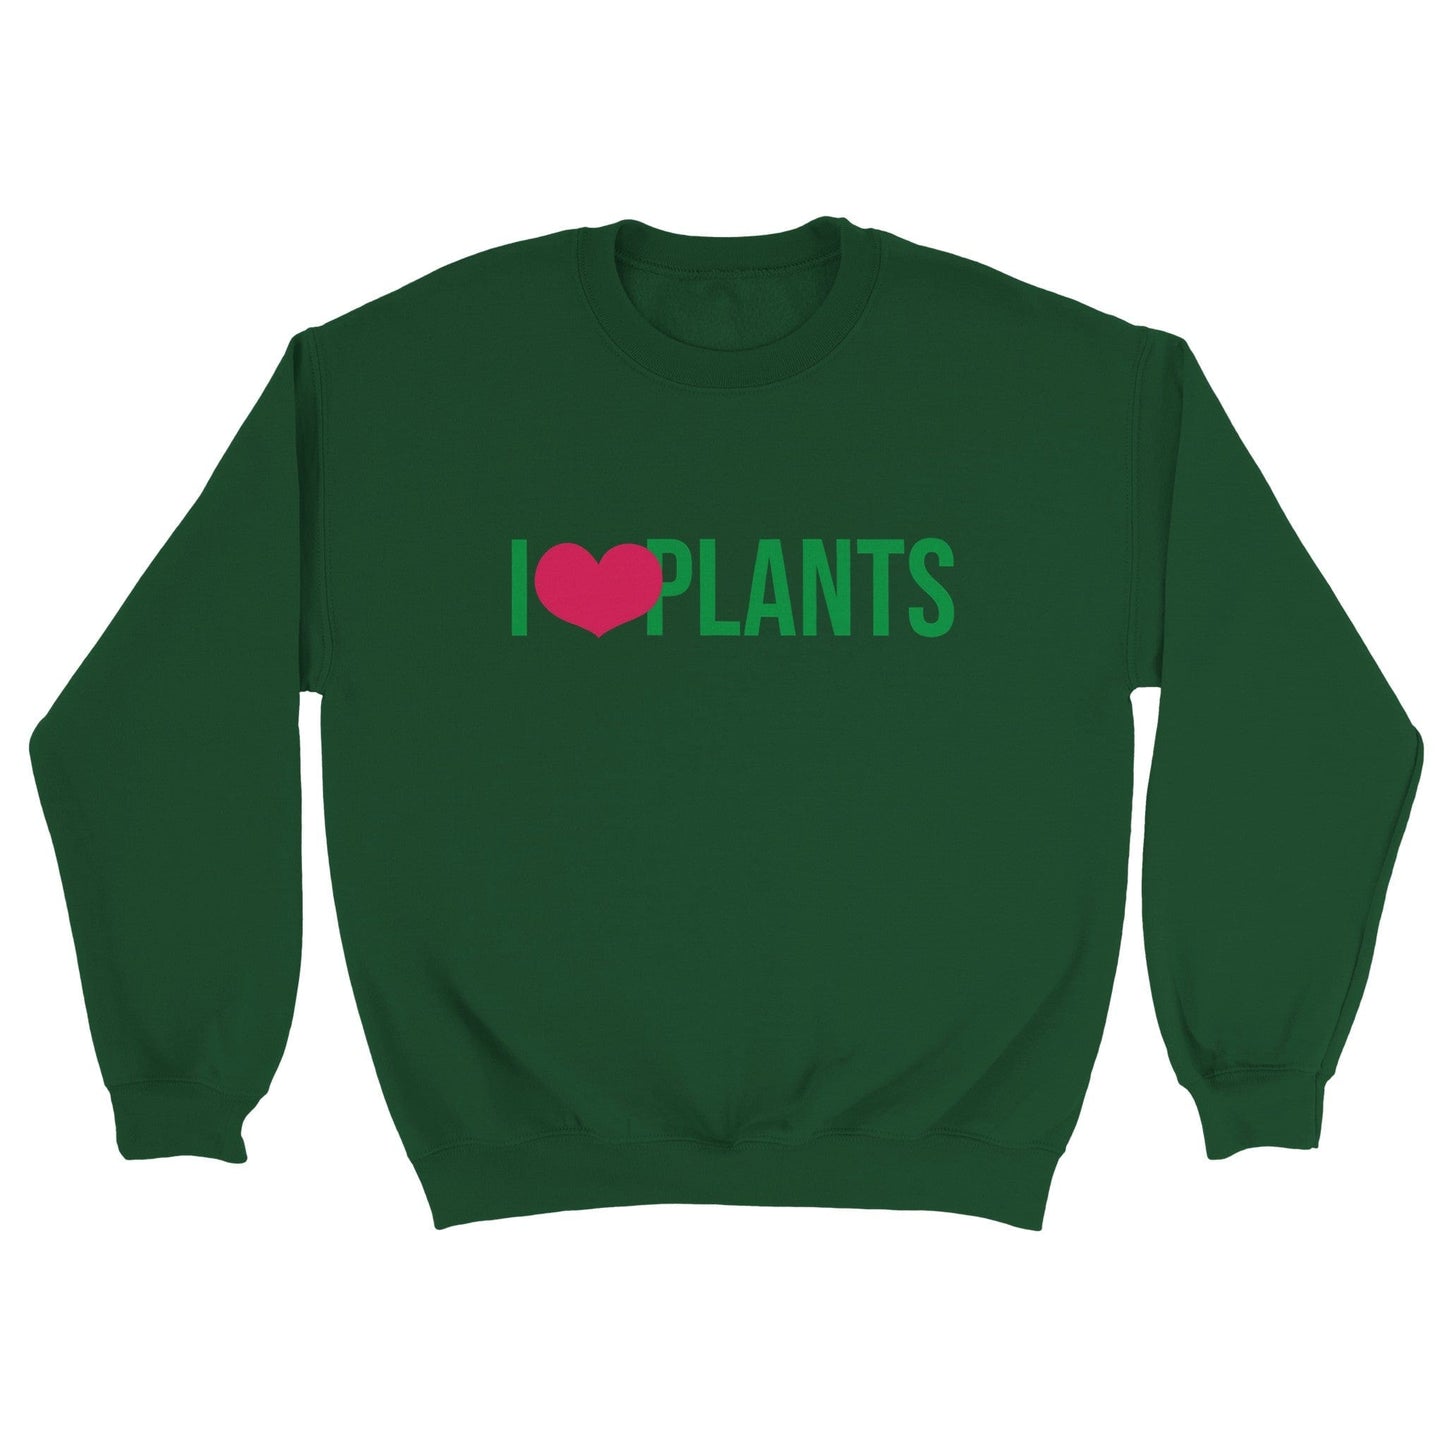 Grow Happy Gifts  I Heart Plants Sweatshirt Forest Green / S